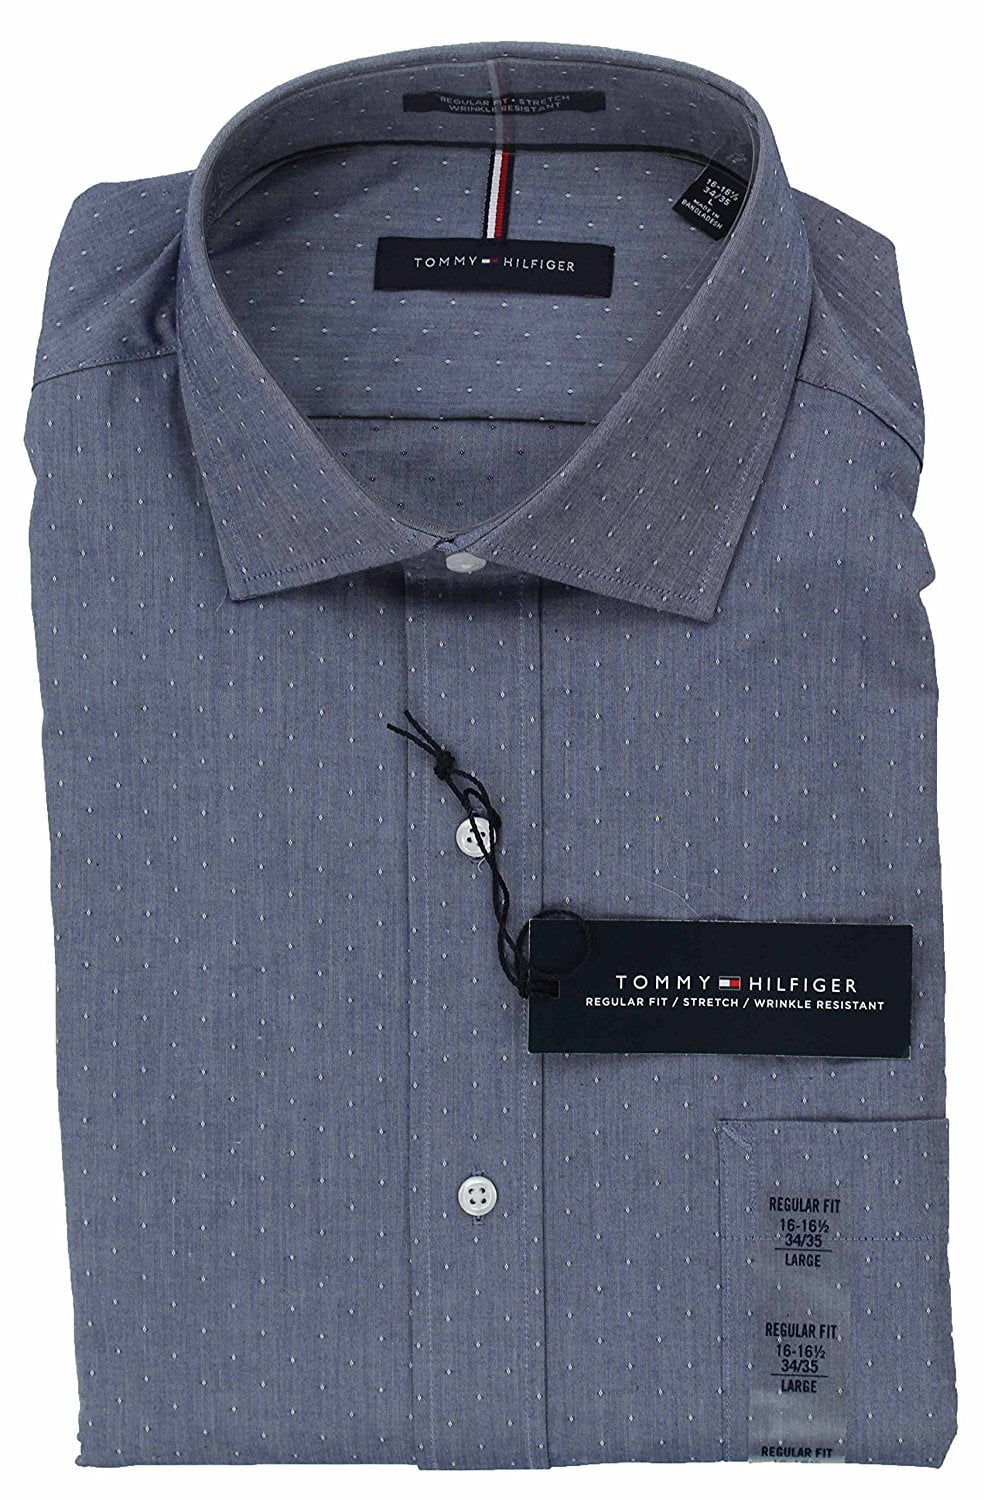 Tommy Hilfiger Mens Regular Fit 100% Cotton Non-Iron Indigo Blue Dress Shirt 